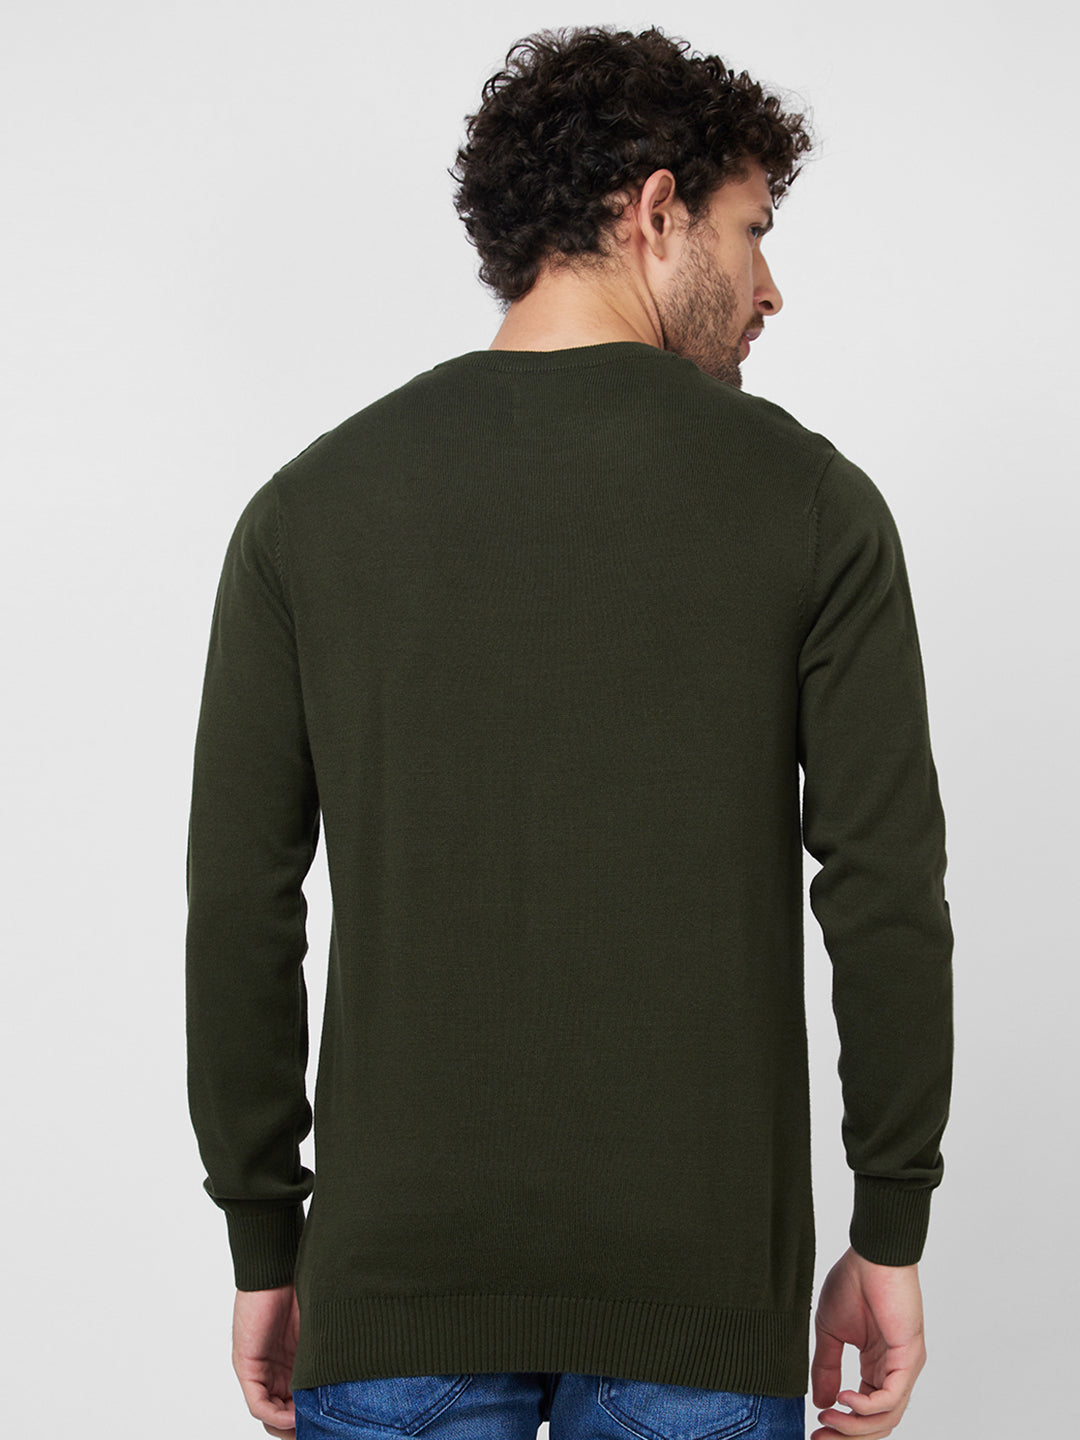 Spykar Full Sleeve Round Neck Green Cotton Sweater For Men